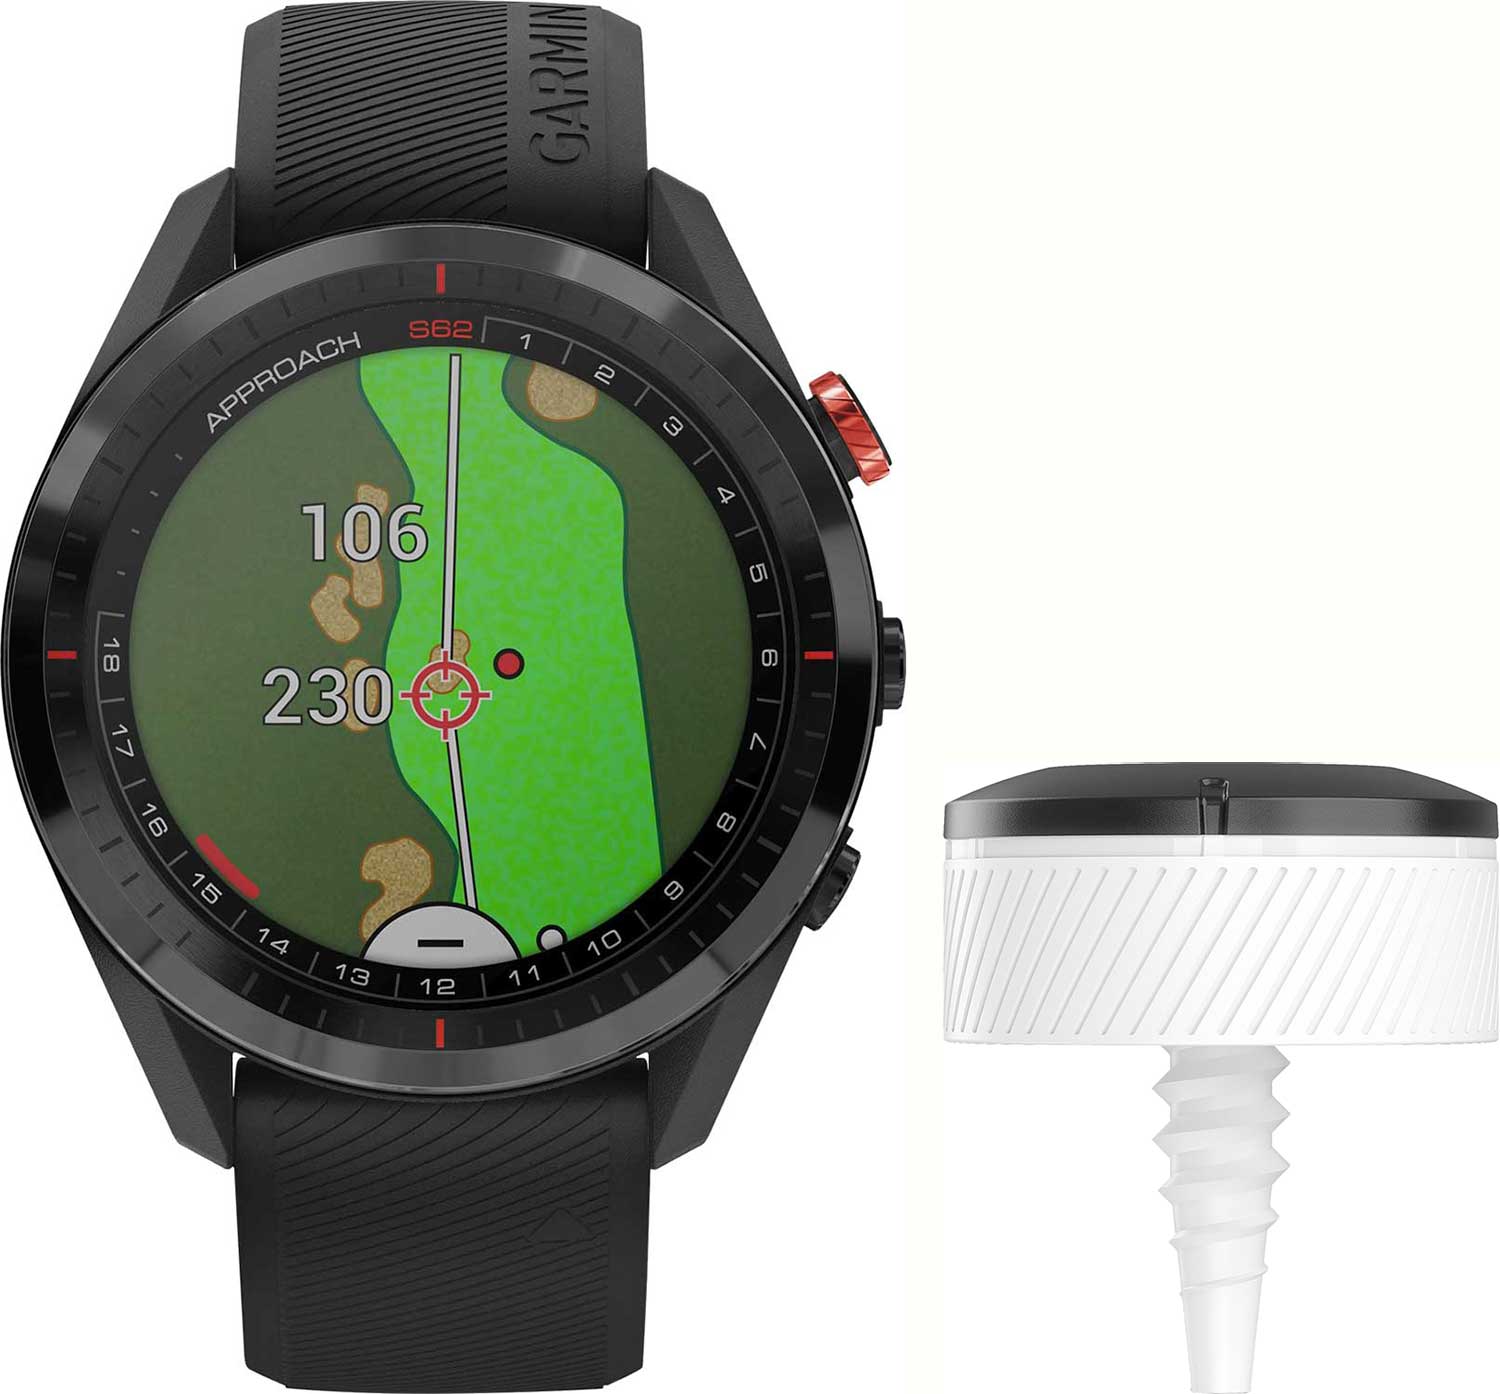   Garmin Approach S62 Wrist GPS with Golf Black Bundle CT10 010-02200-02